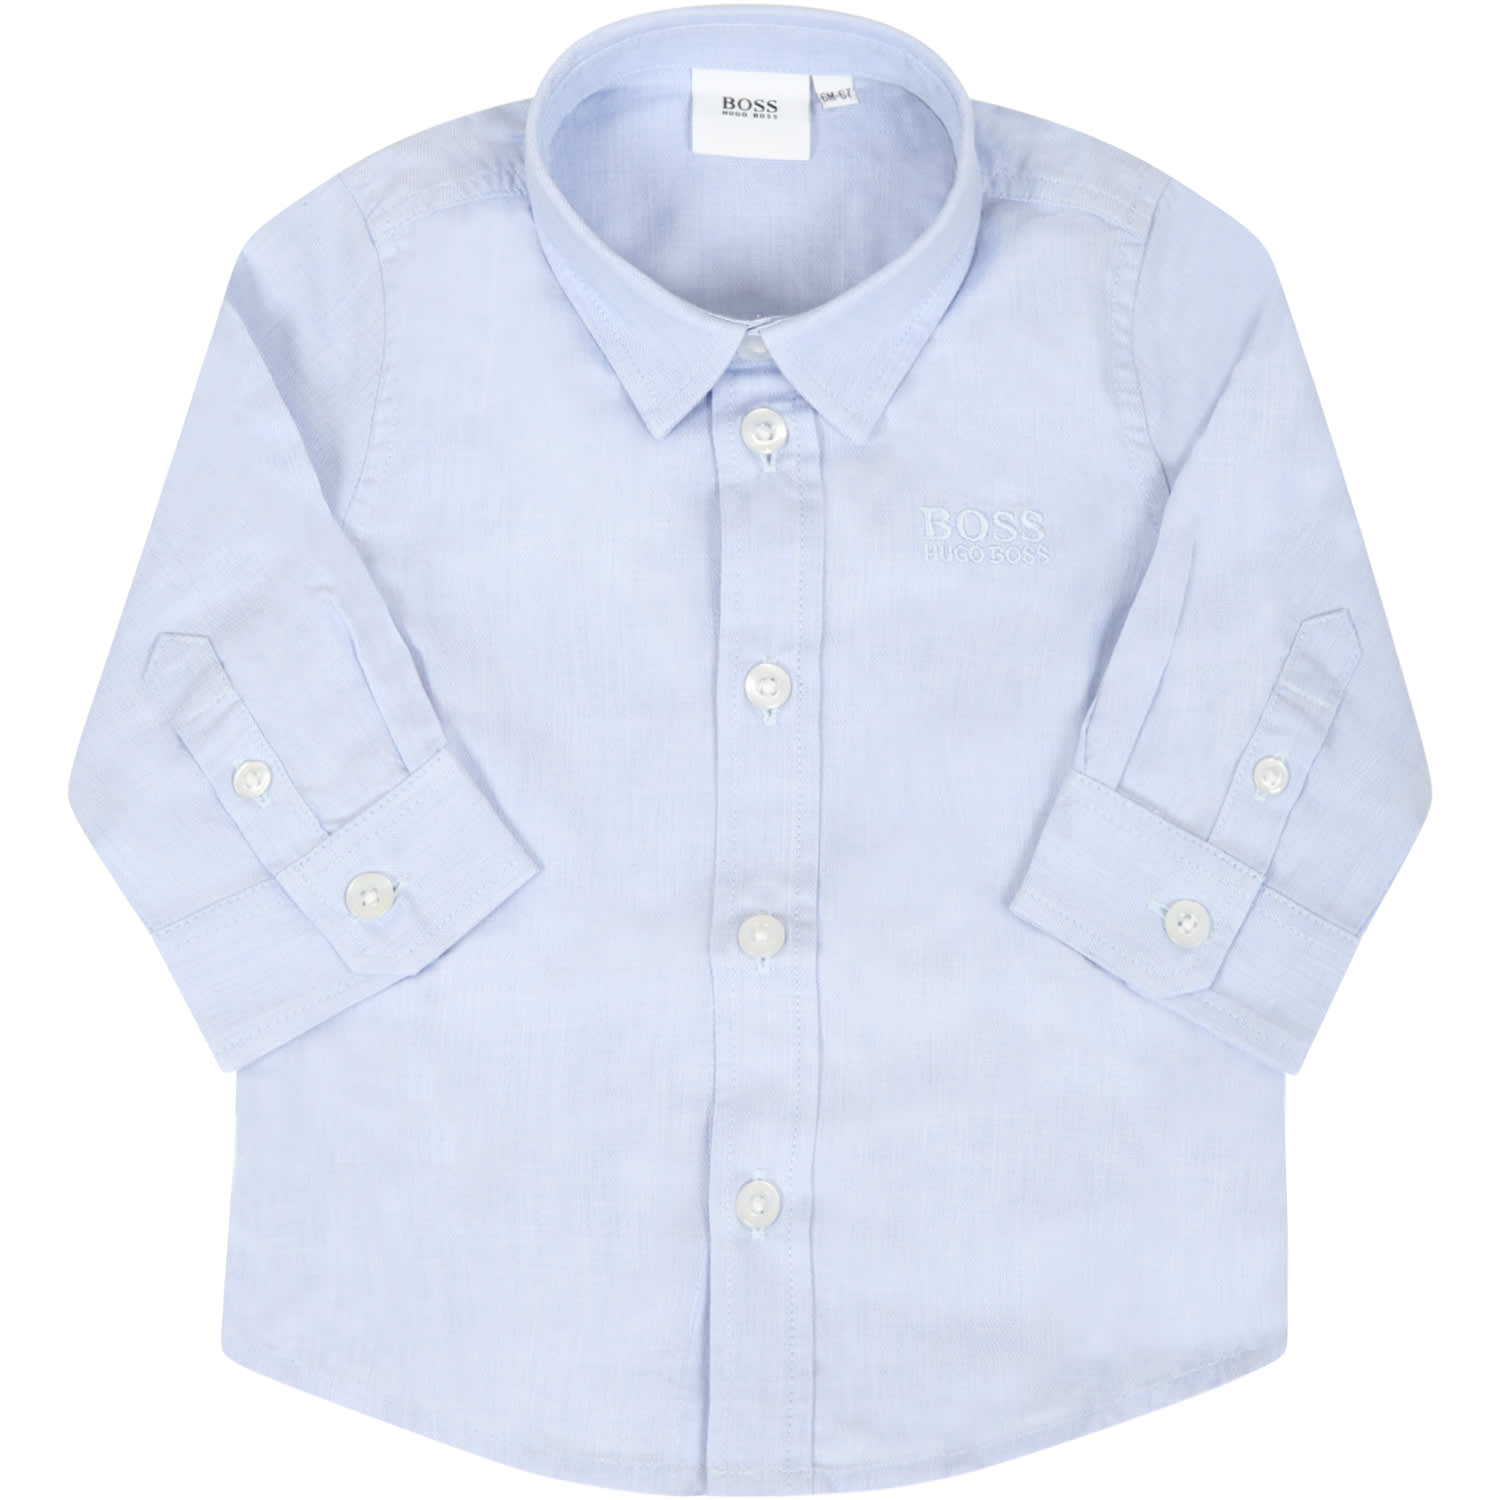 Hugo Boss Light Blue Shirt For Babyboy With Logo